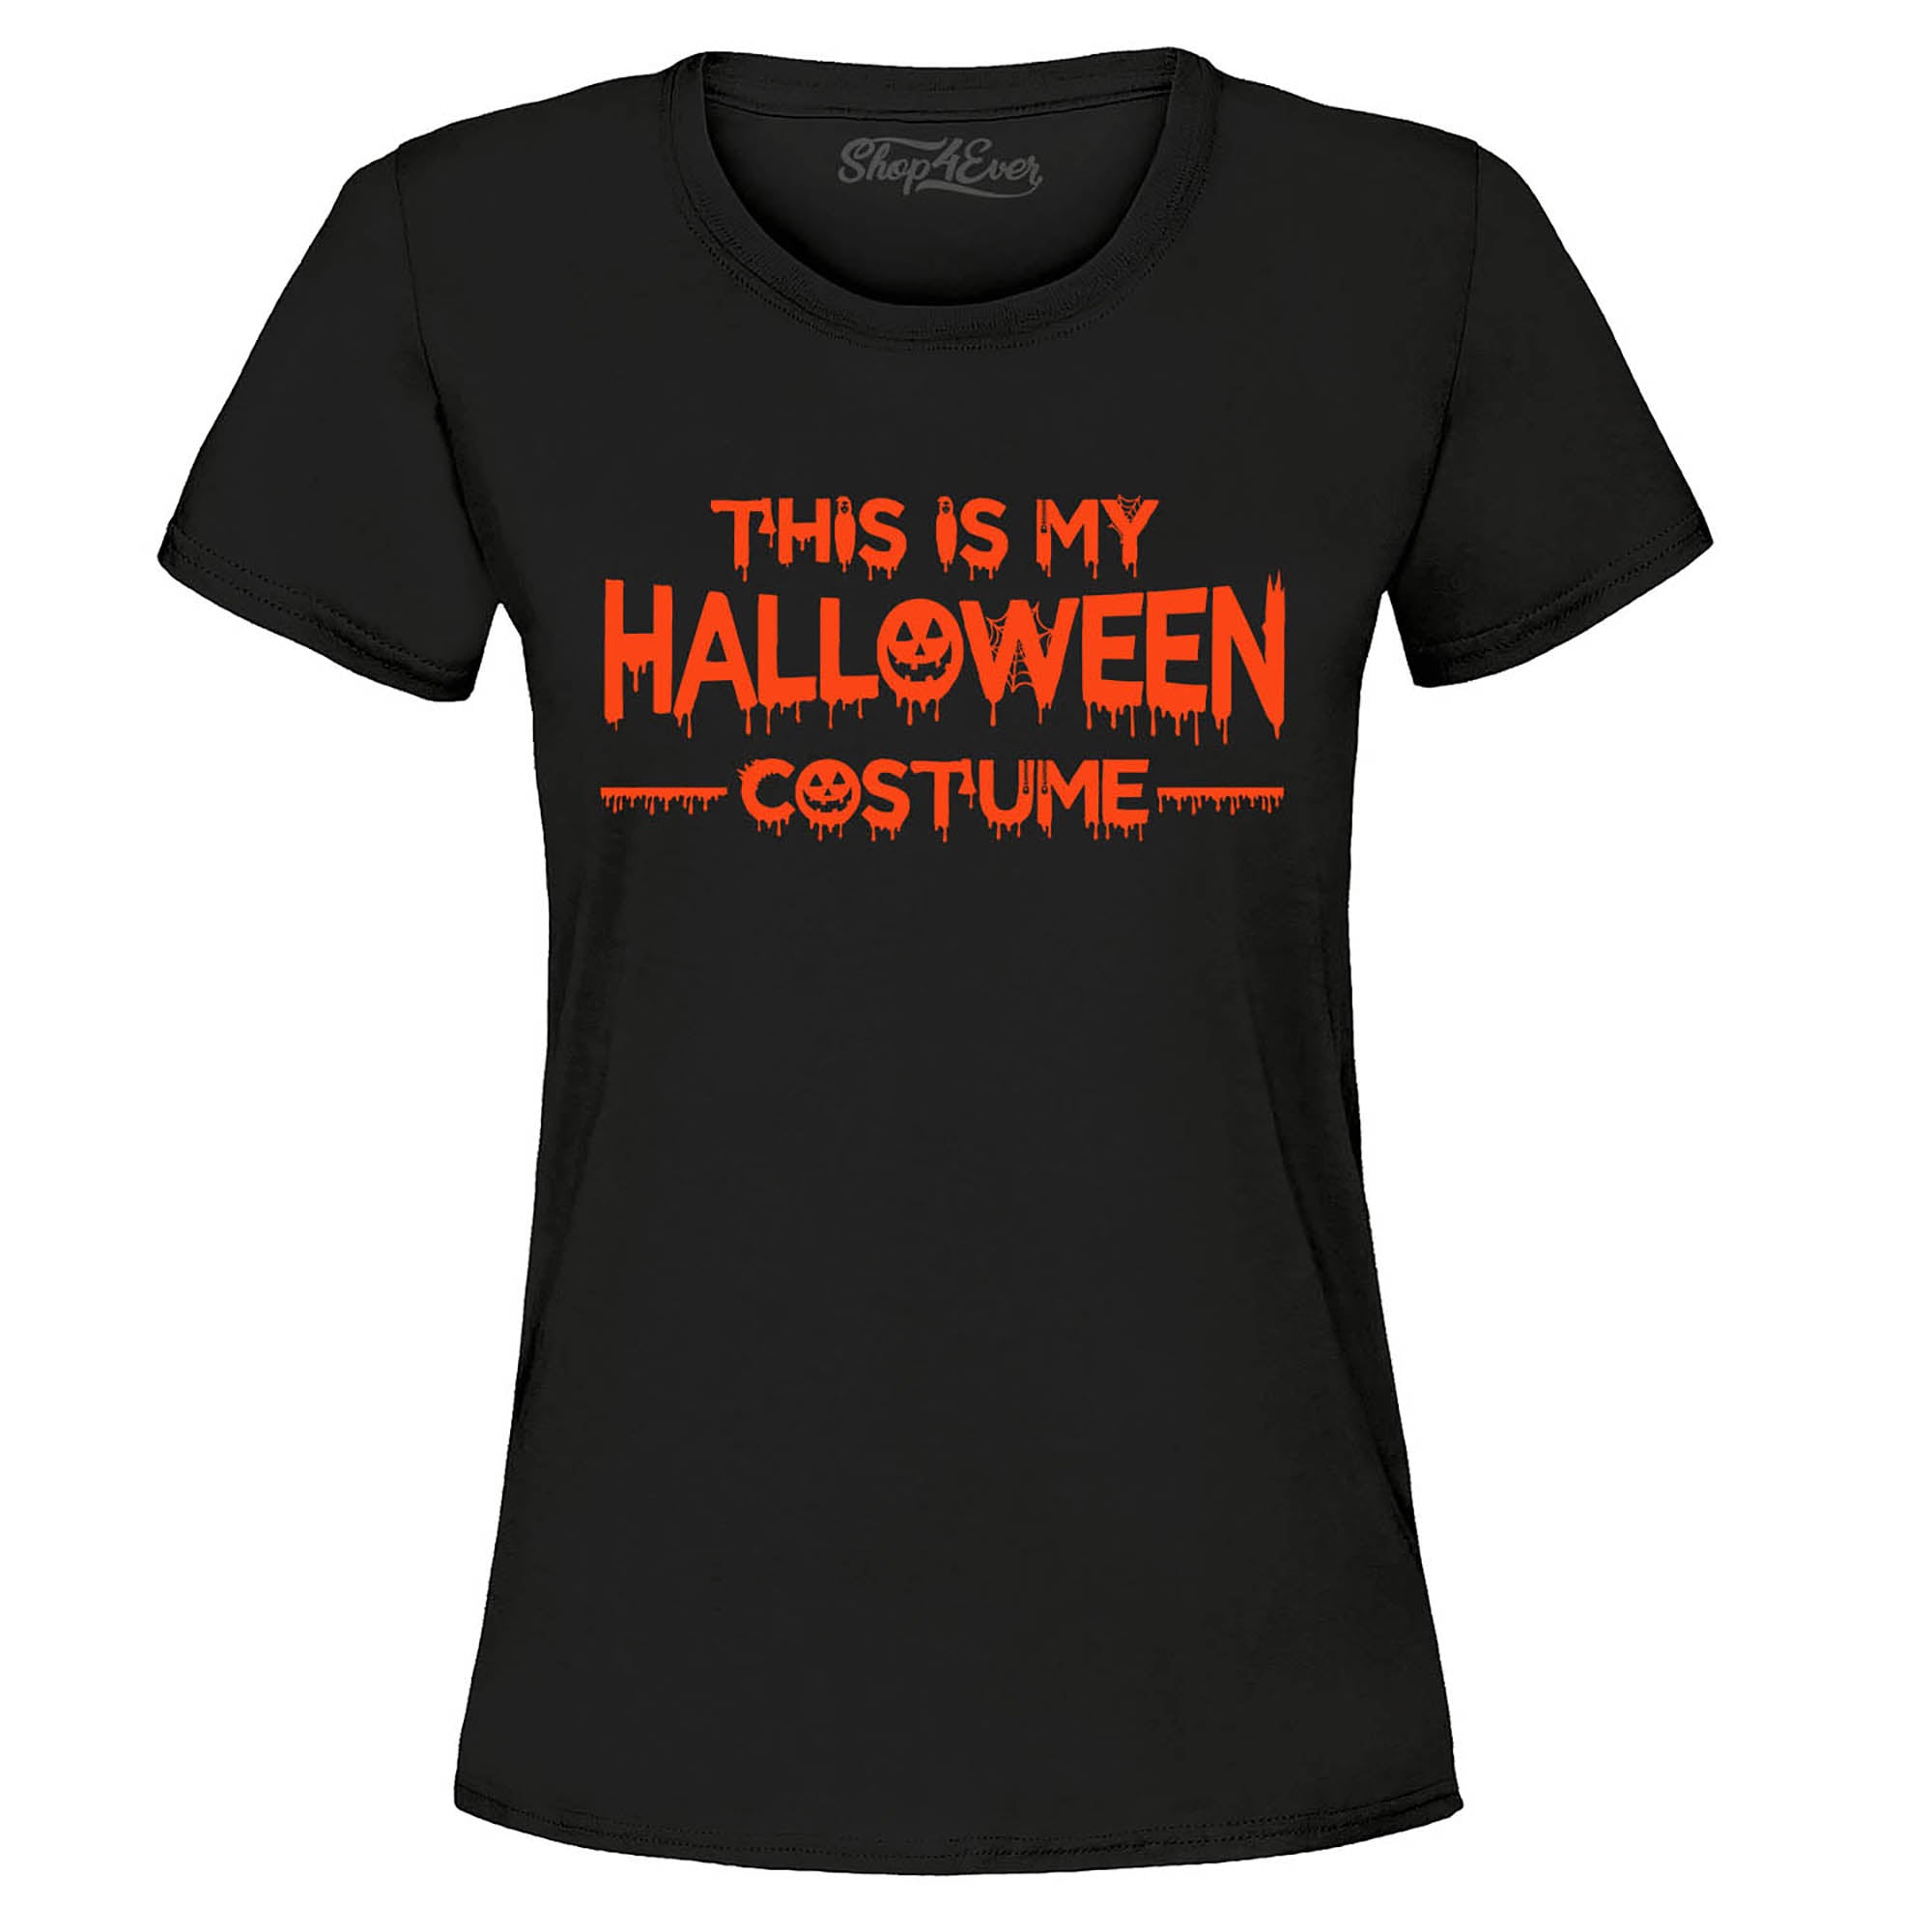 This is My Halloween Costume Women's T-Shirt